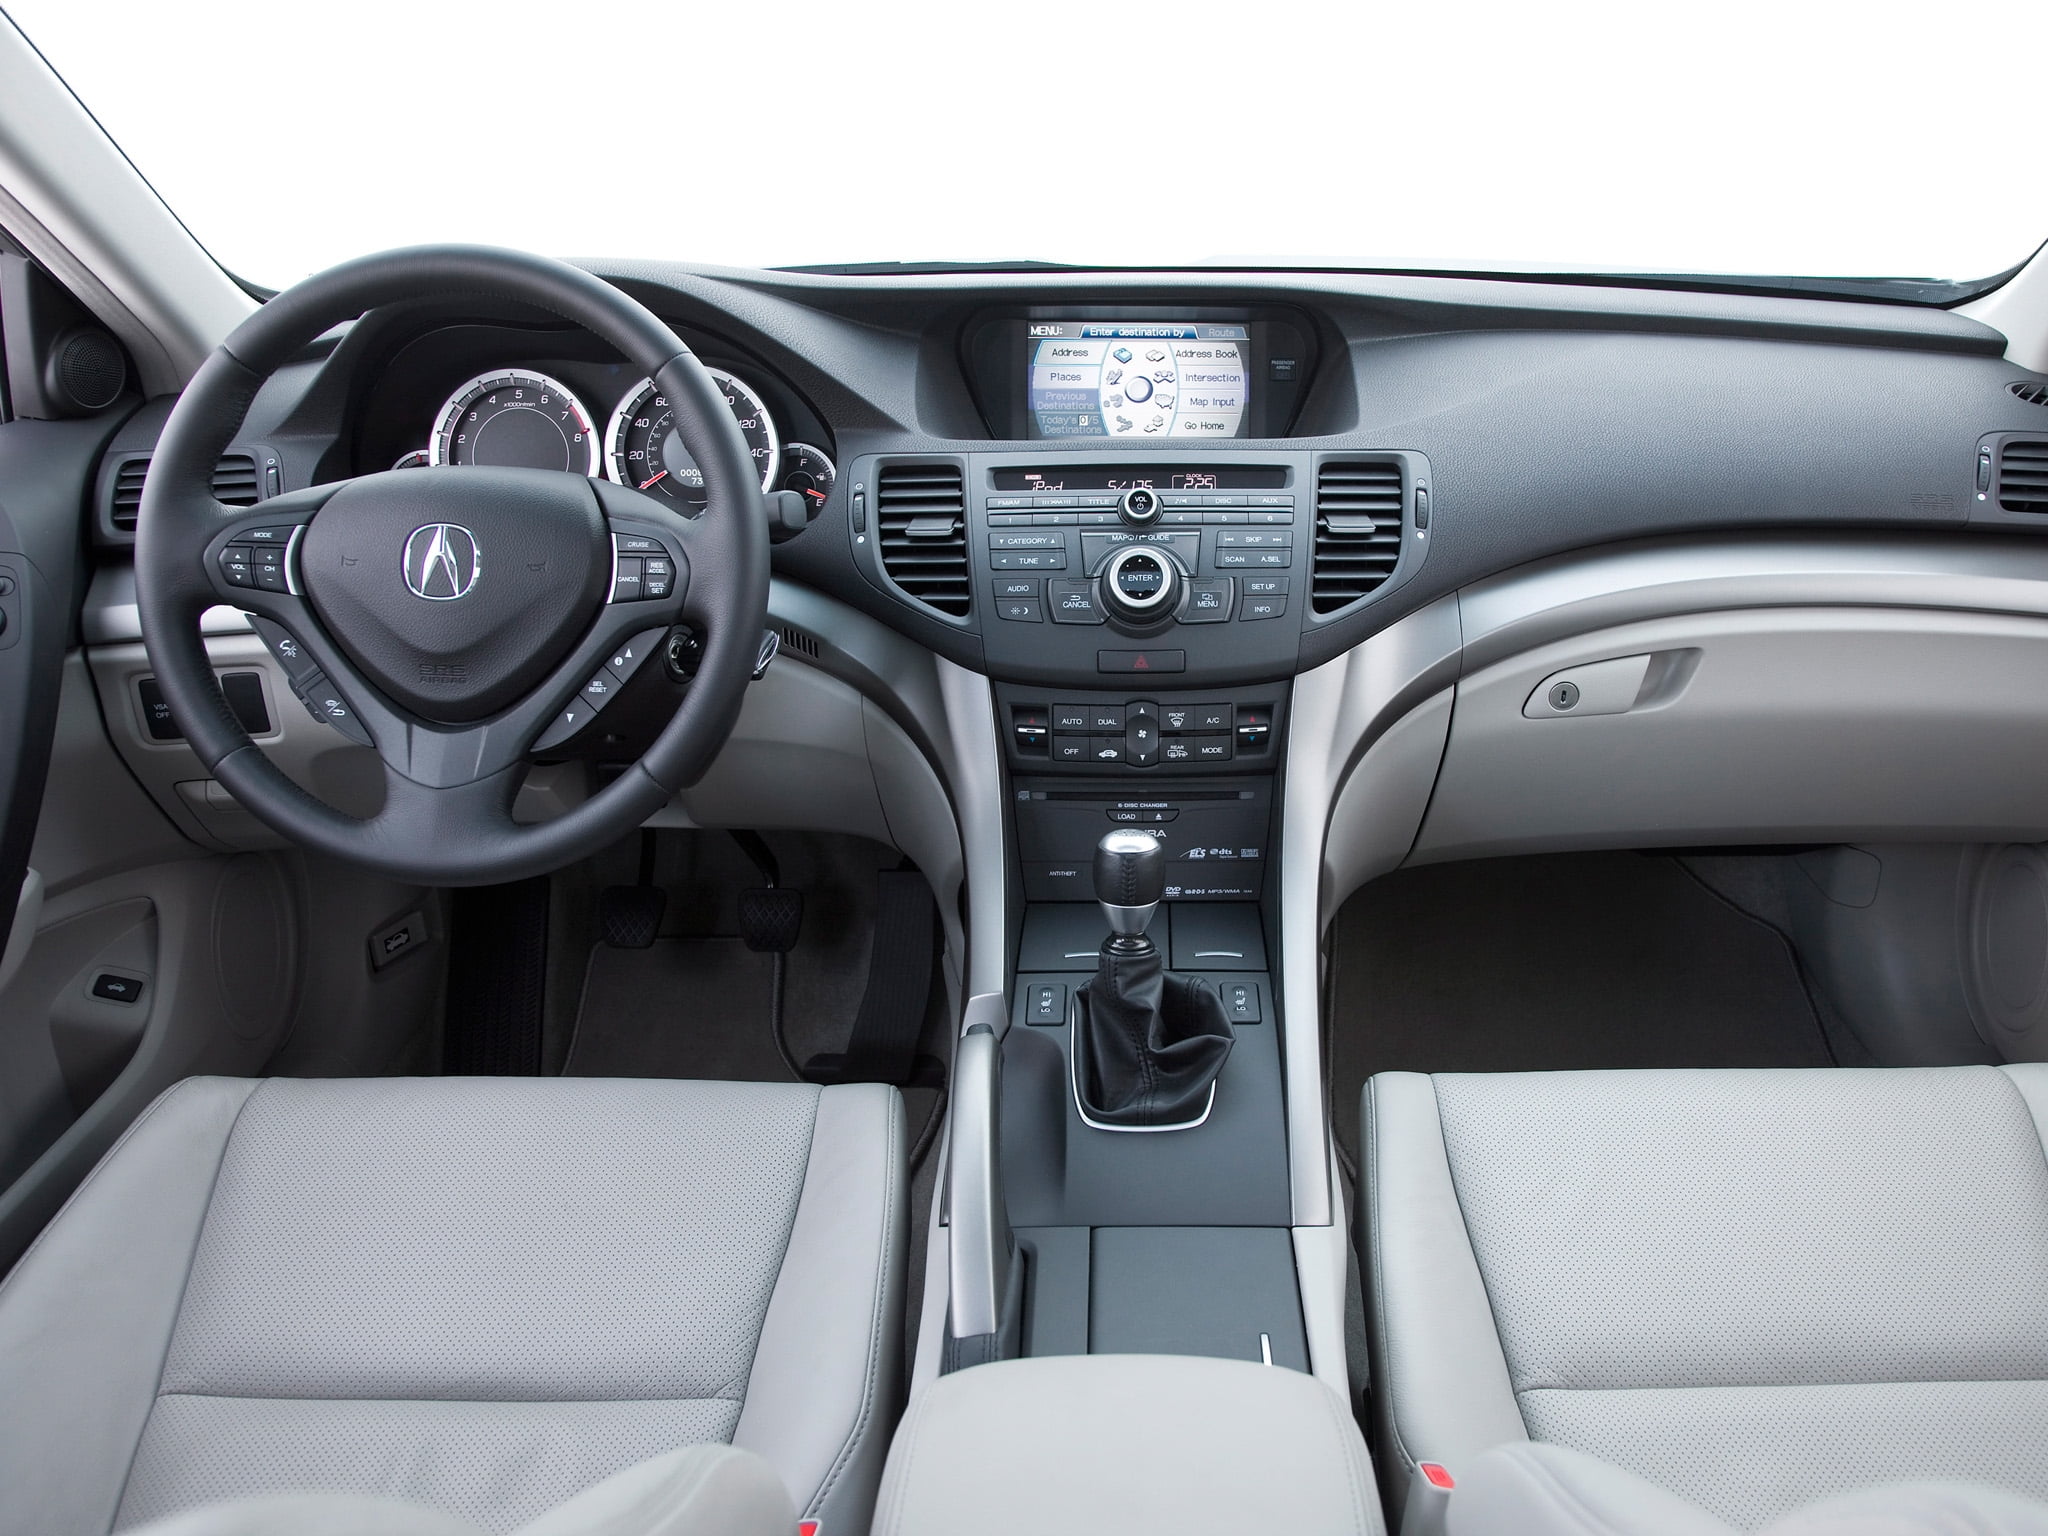 black Acura steering wheel, tsx, salon, interior, speedometer